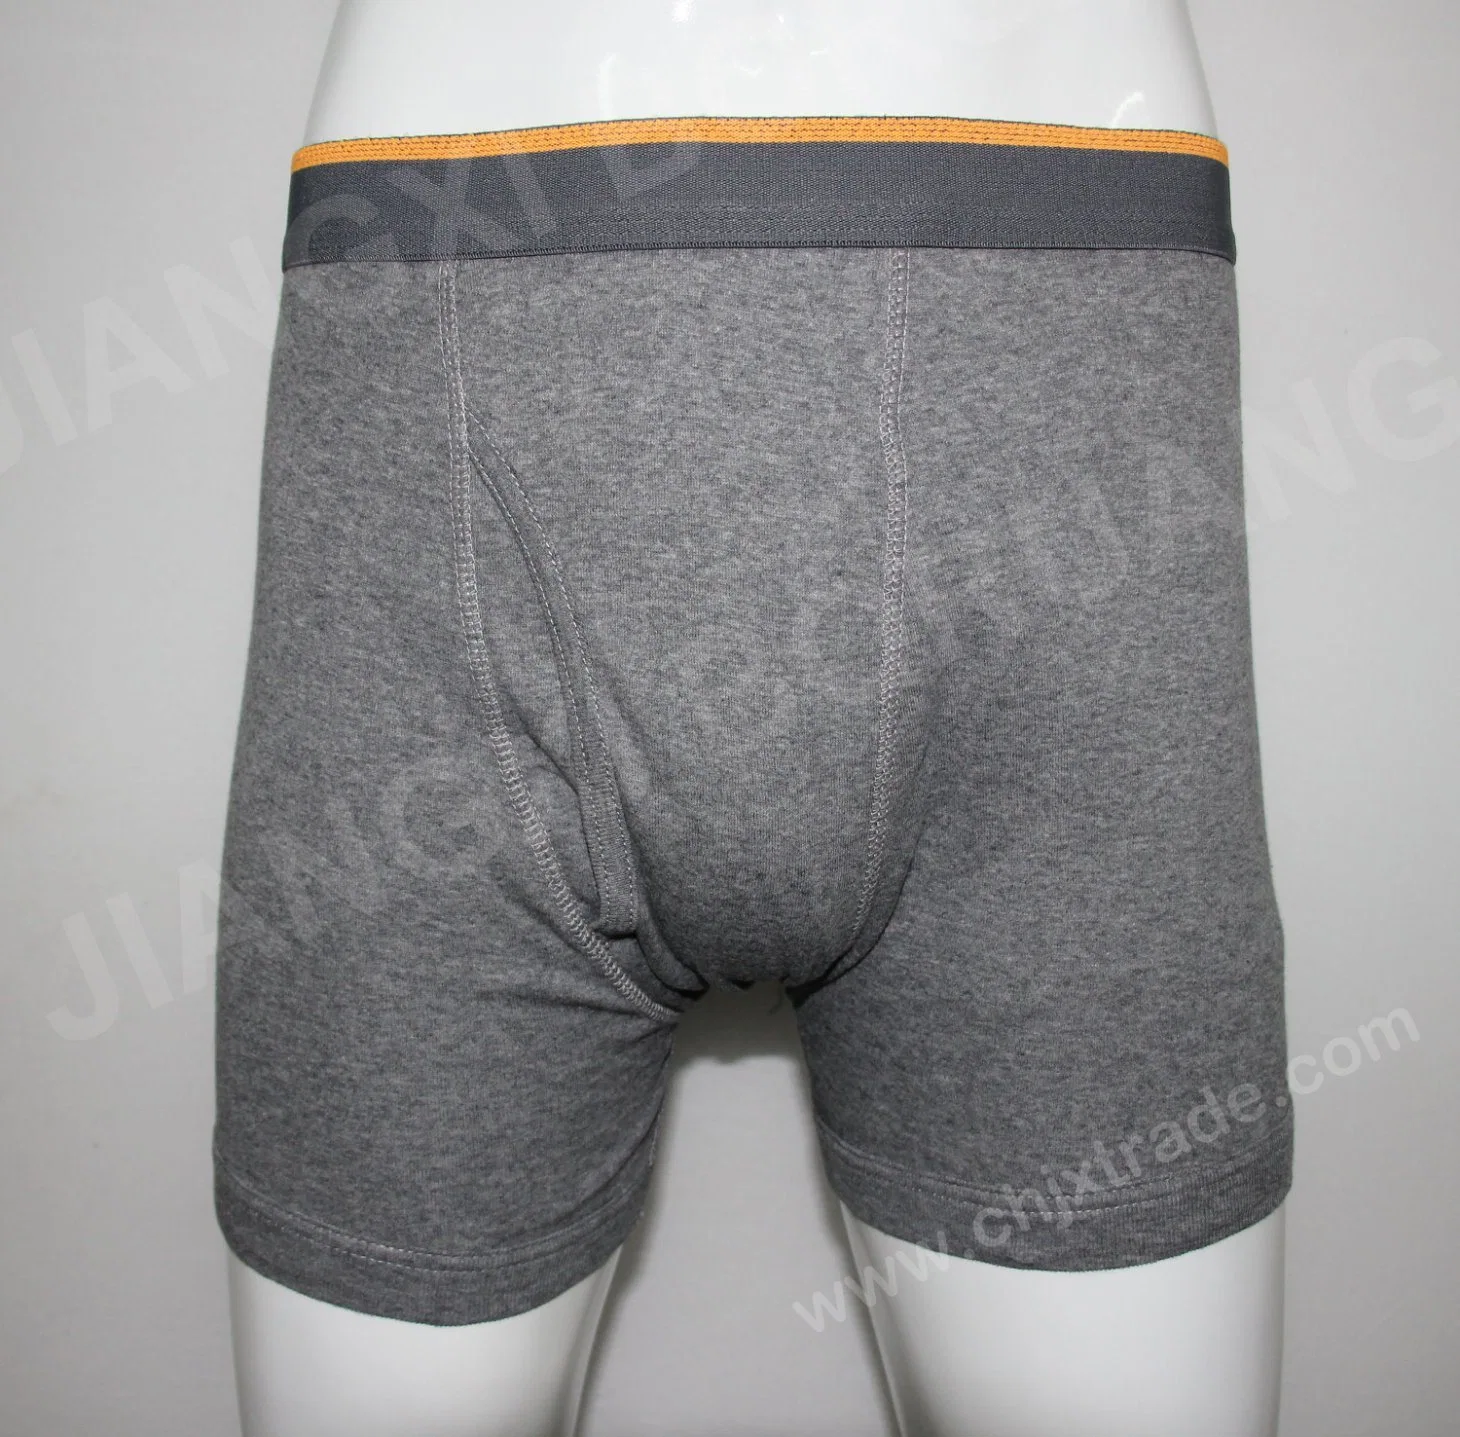 Wholesale/Supplier Cheap Panties Sexy Underwear Clothes Fashion Custom Print Panty Mens Short Boxer Hot Sale Briefs